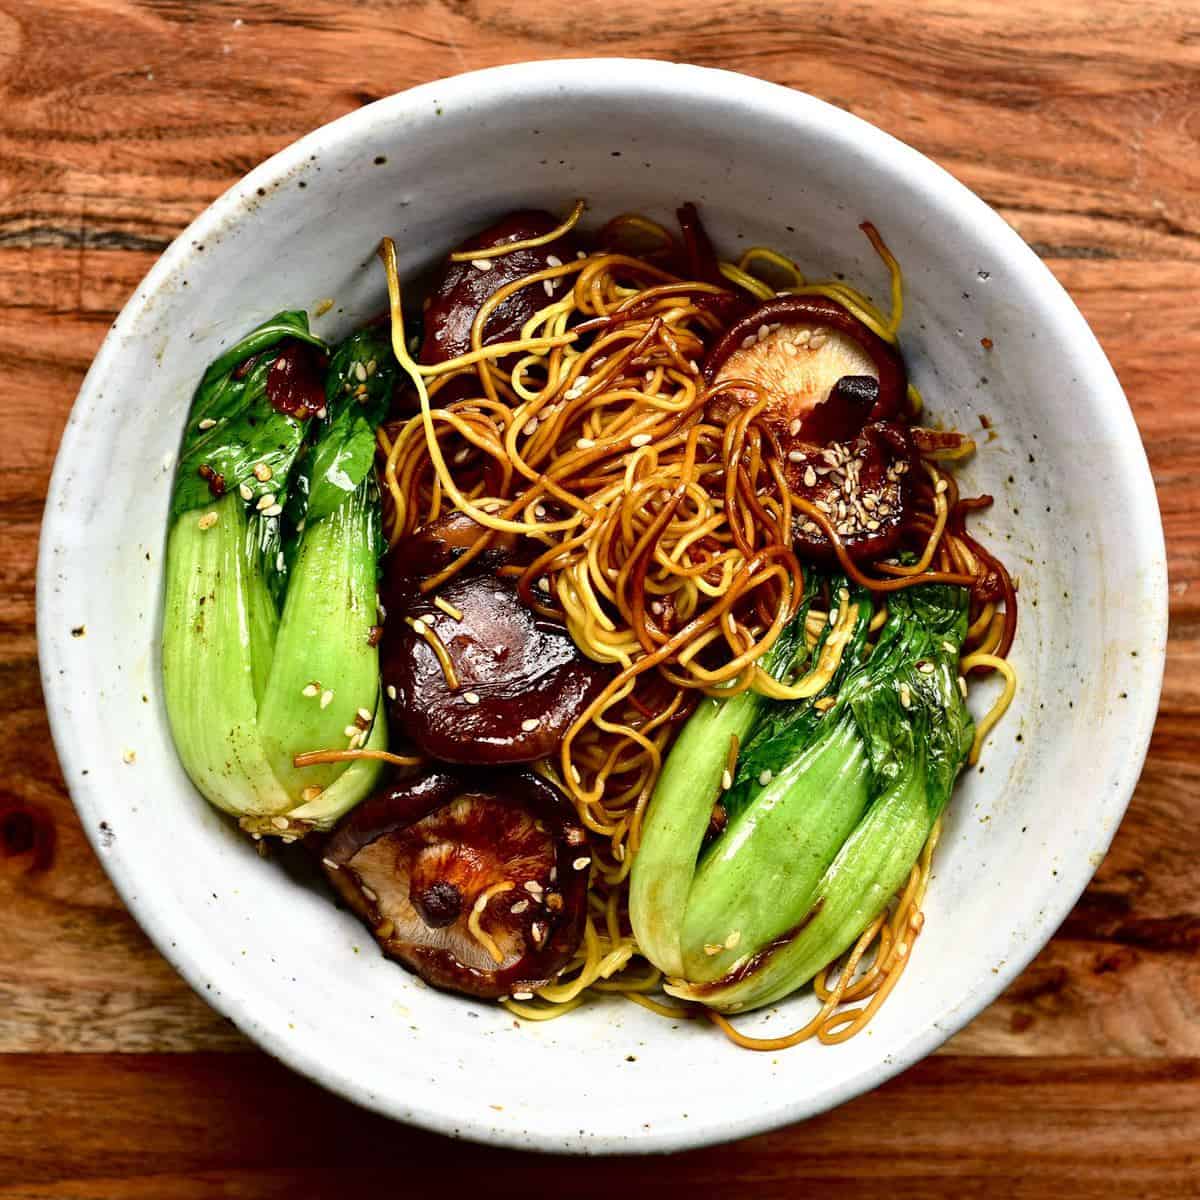 Dan dan noodles with bok choy and mushrooms in a bowl